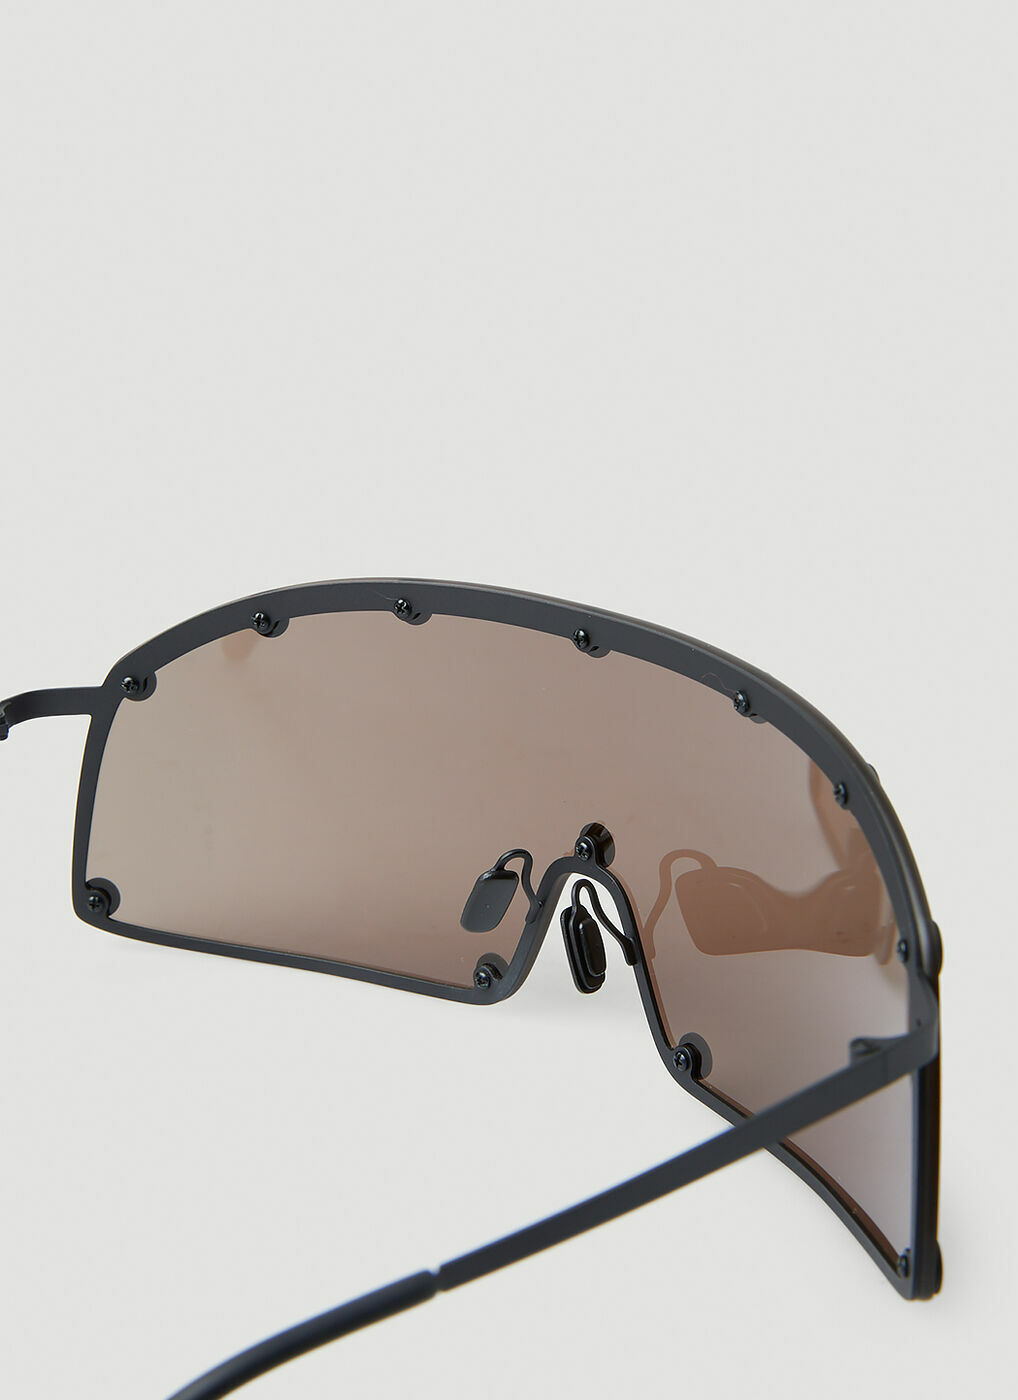 Performa Shielding Sunglasses in Black